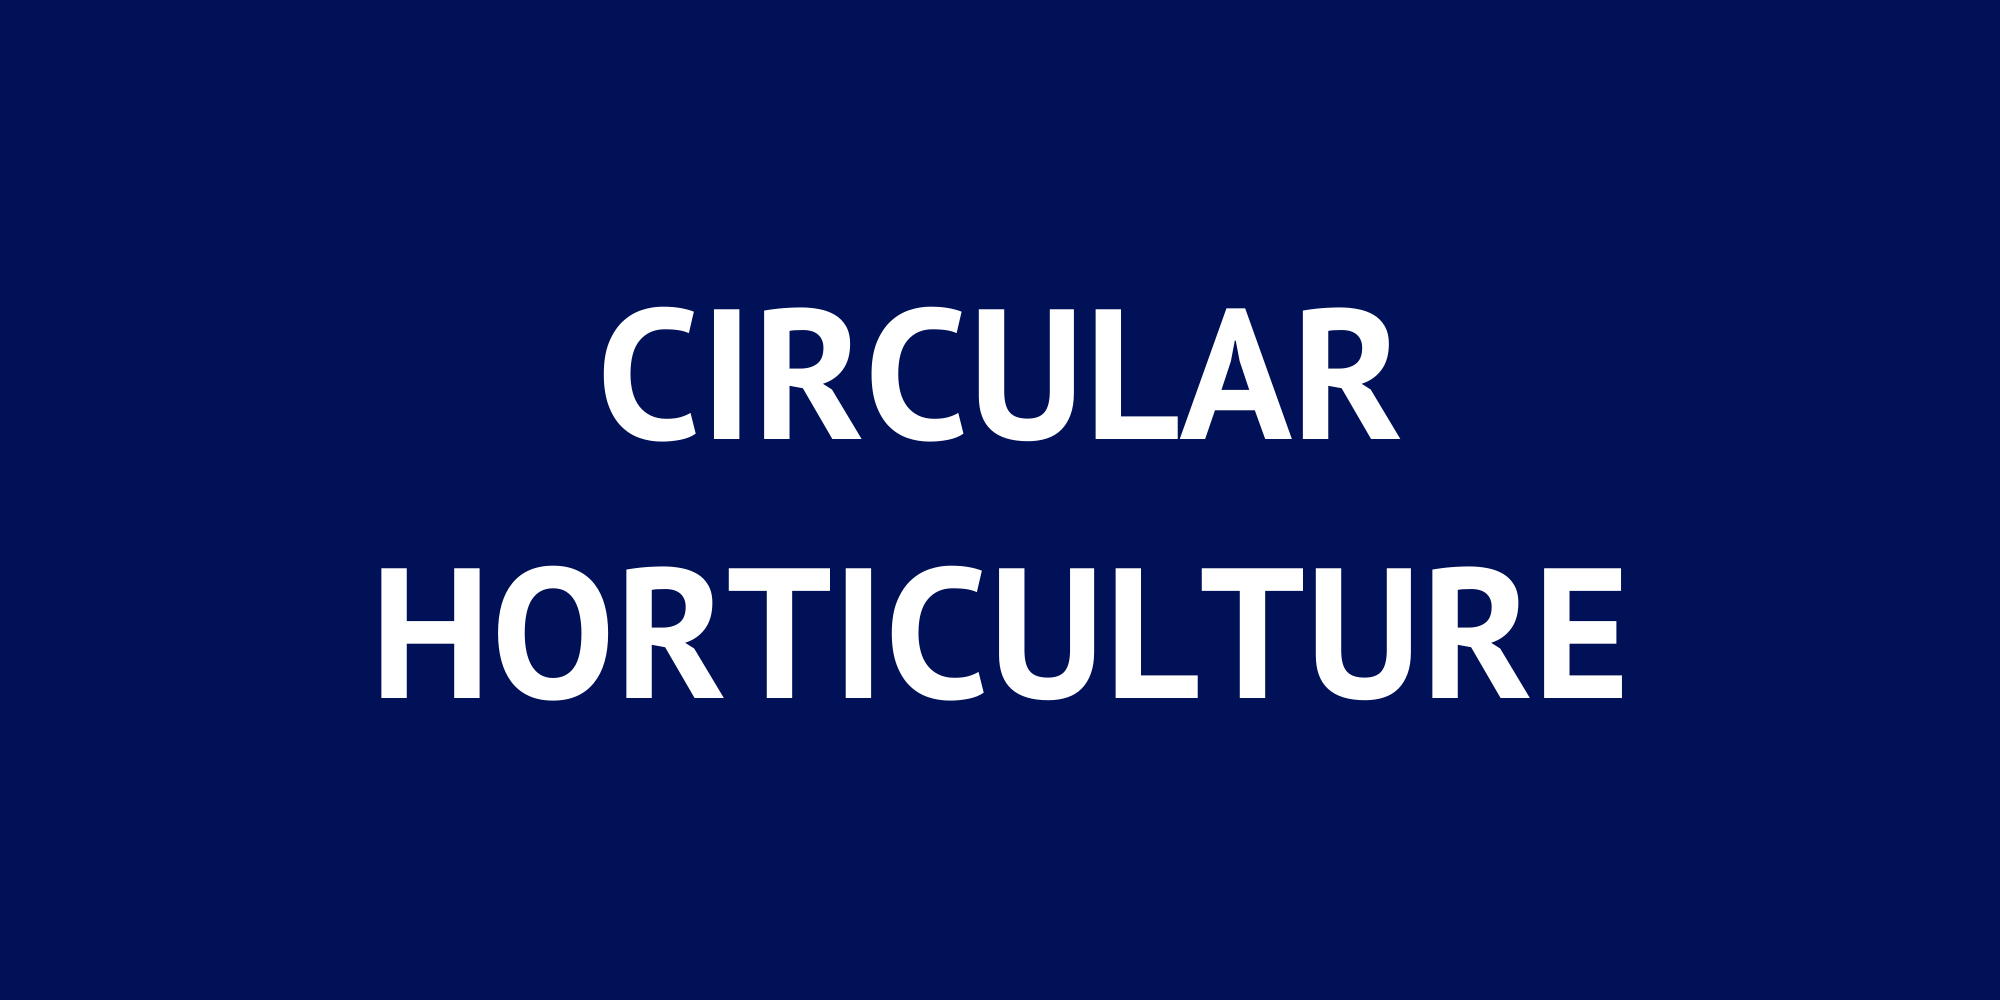 Circular Horticulture